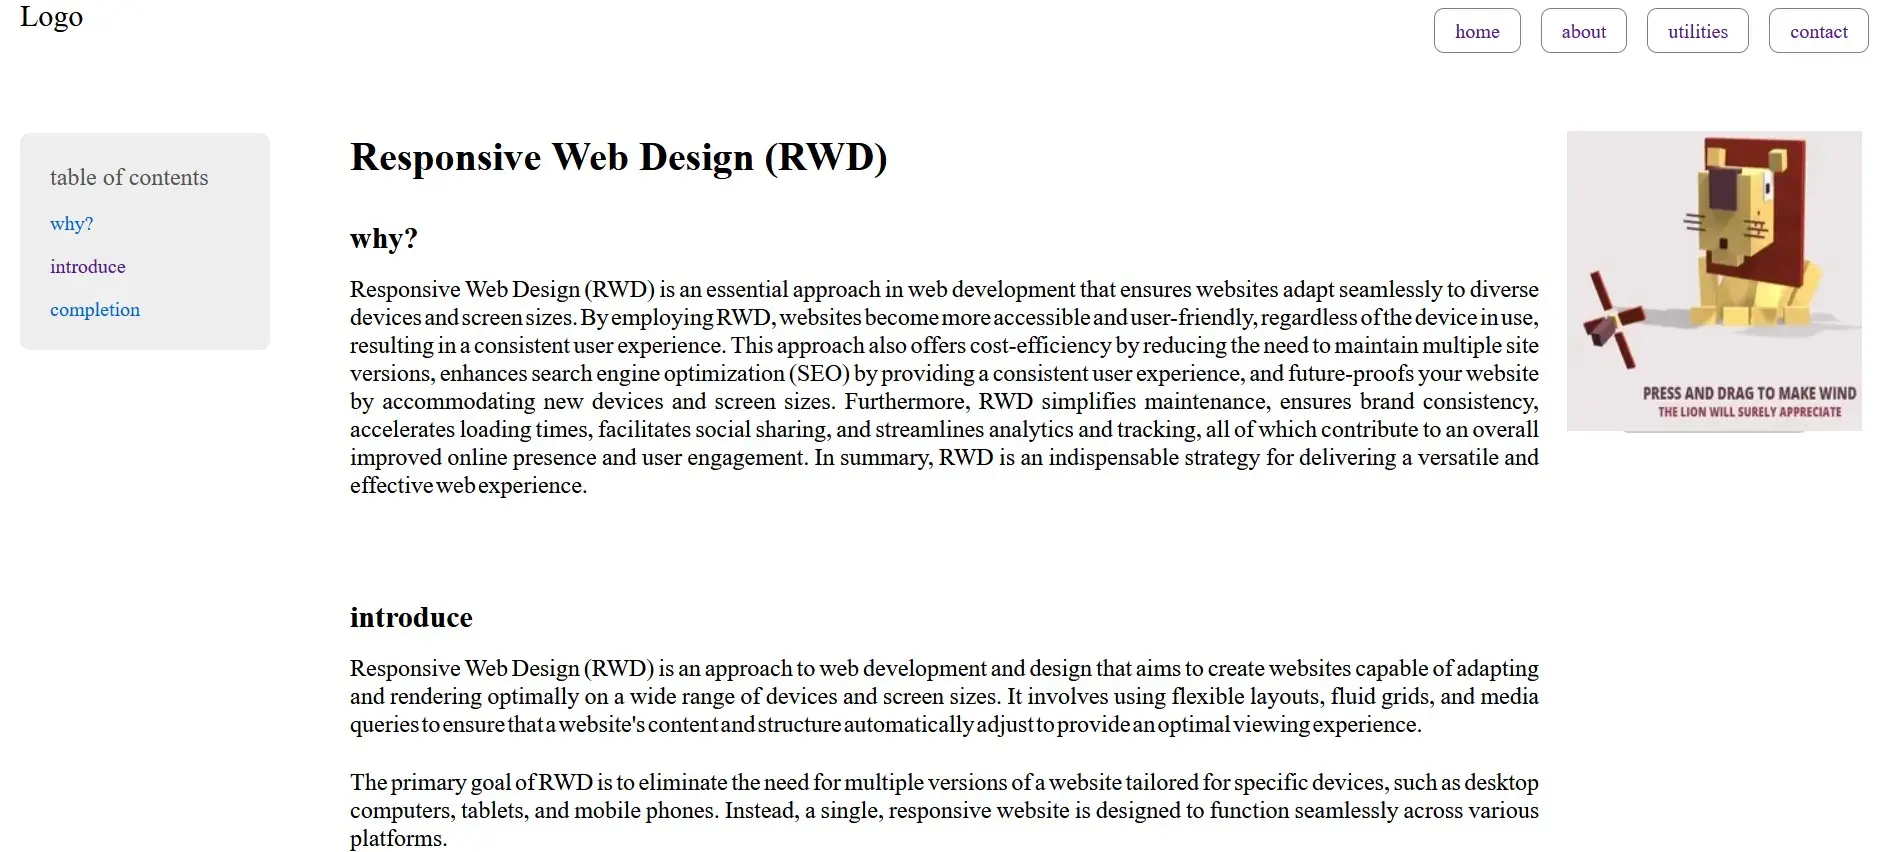 ResPonsive Web Design image